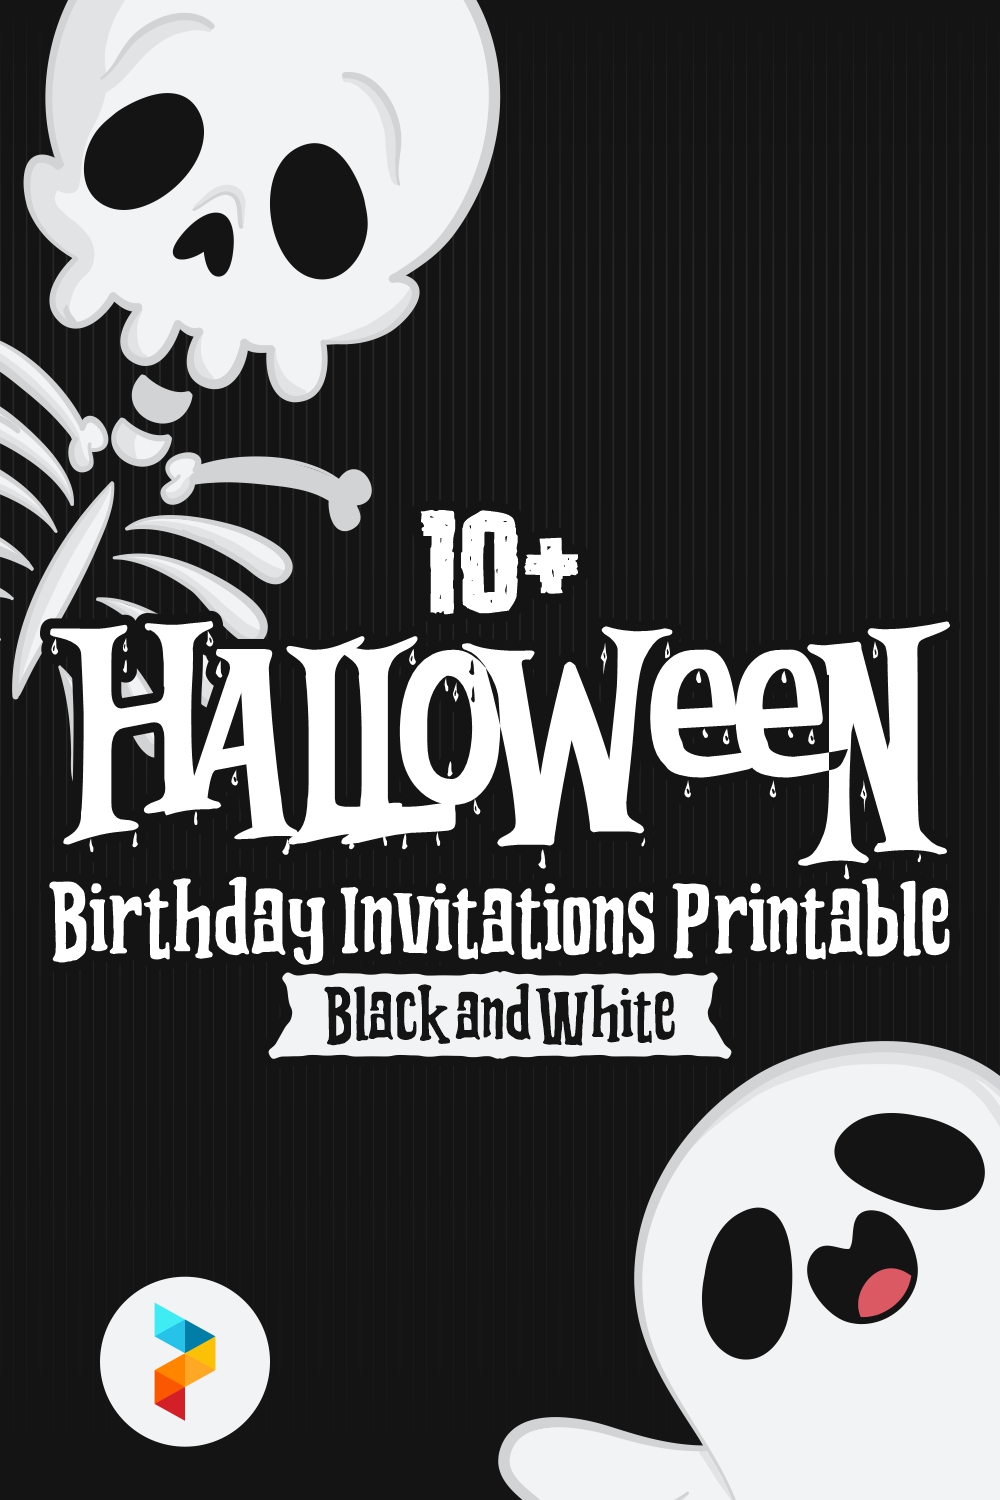 Halloween Birthday Invitations Printable Black And White